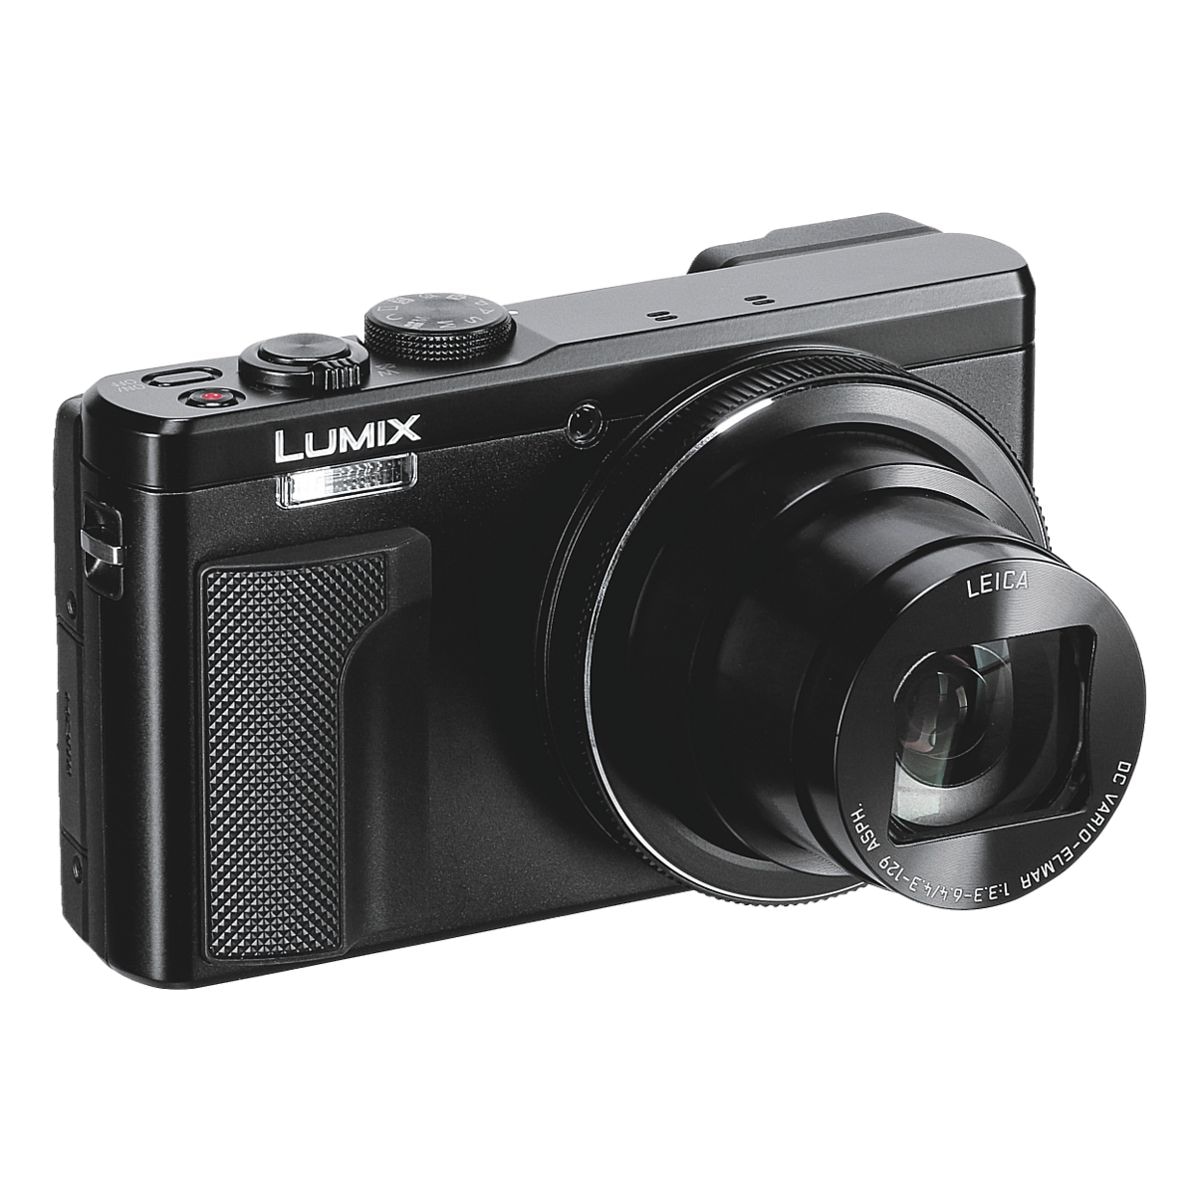 Panasonic Digitalkamera »Lumix DMCTZ81«  Bei OTTO Office günstig kaufen.